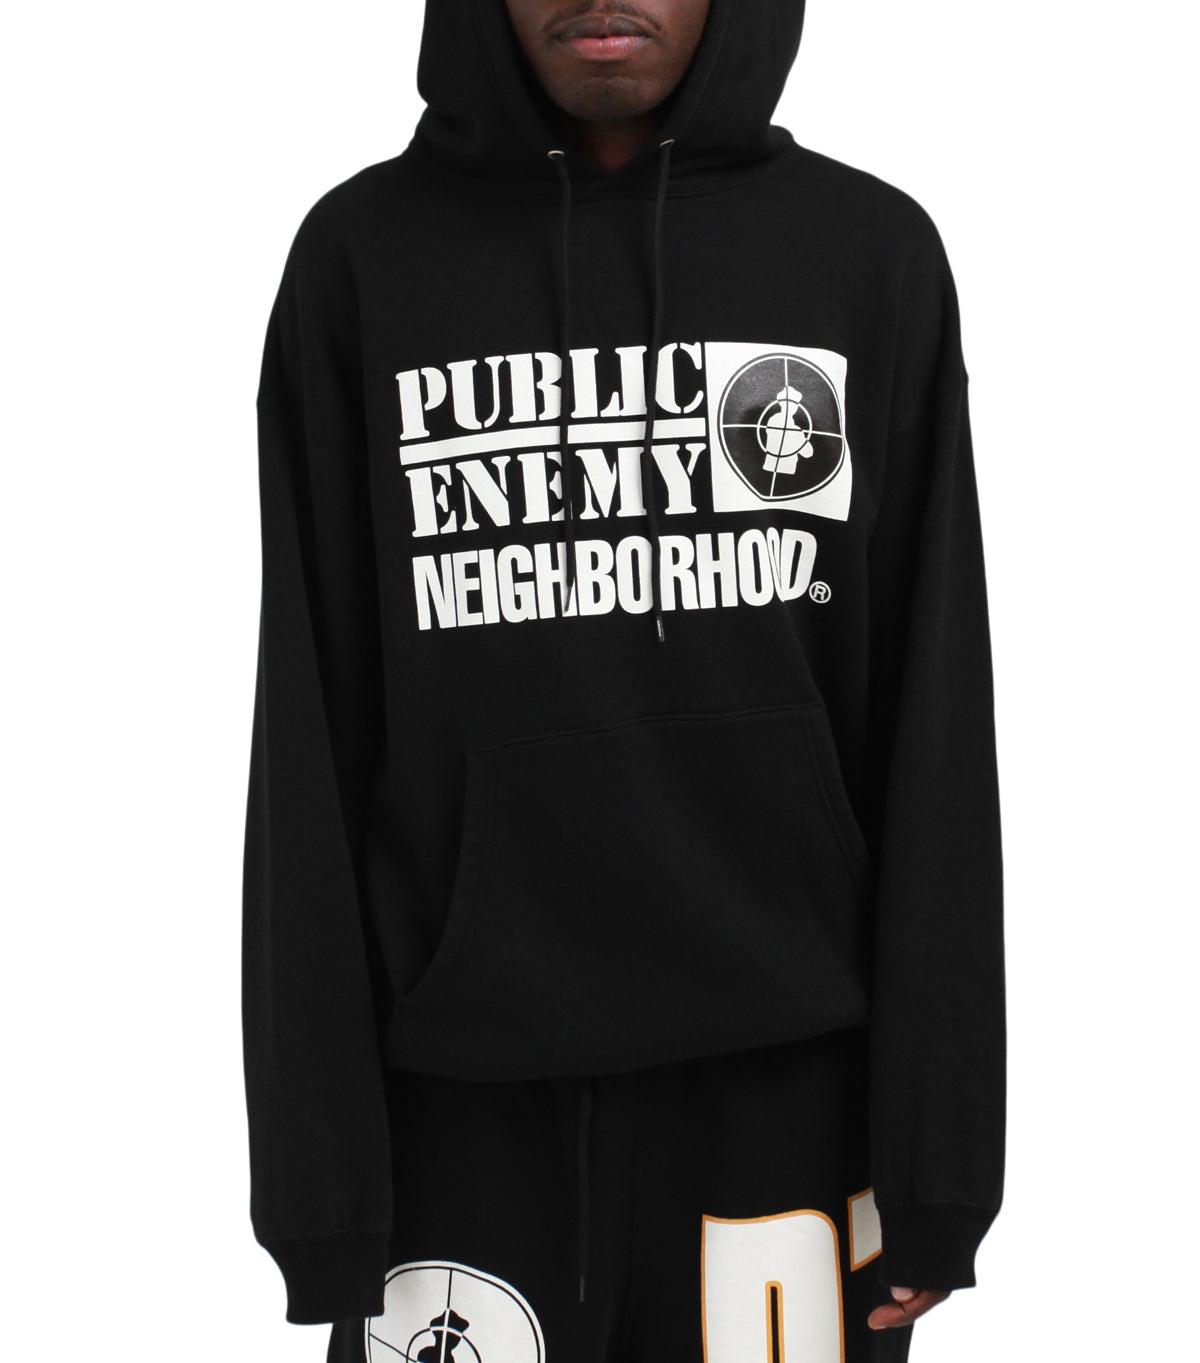 Neighborhood x Public Enemy Sweatparka Long Sleeve Black